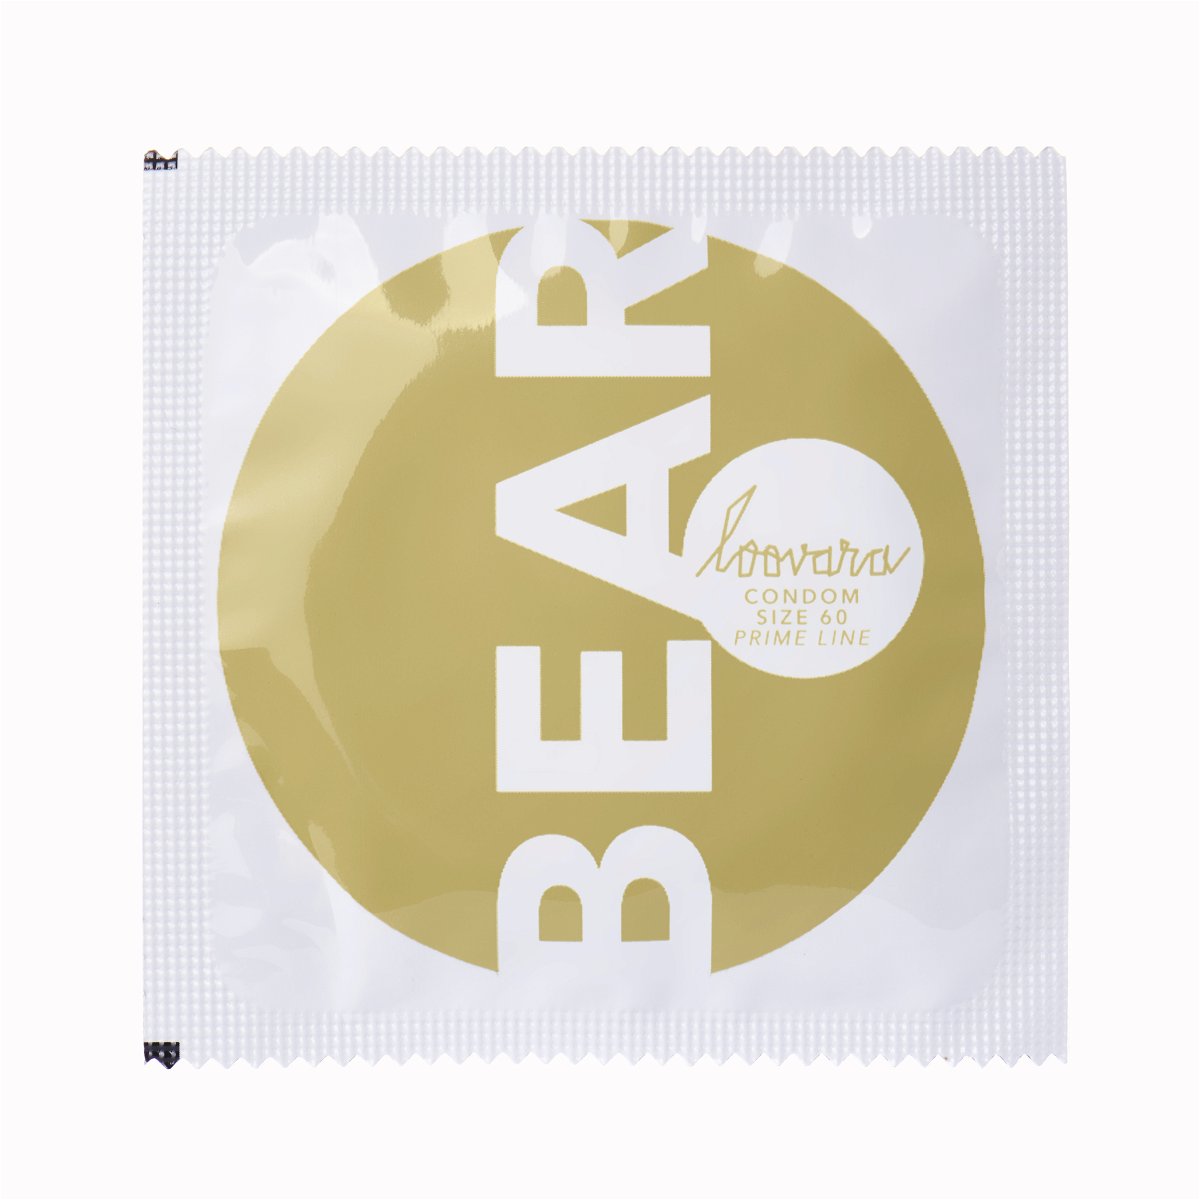 Bear 60 Kondome